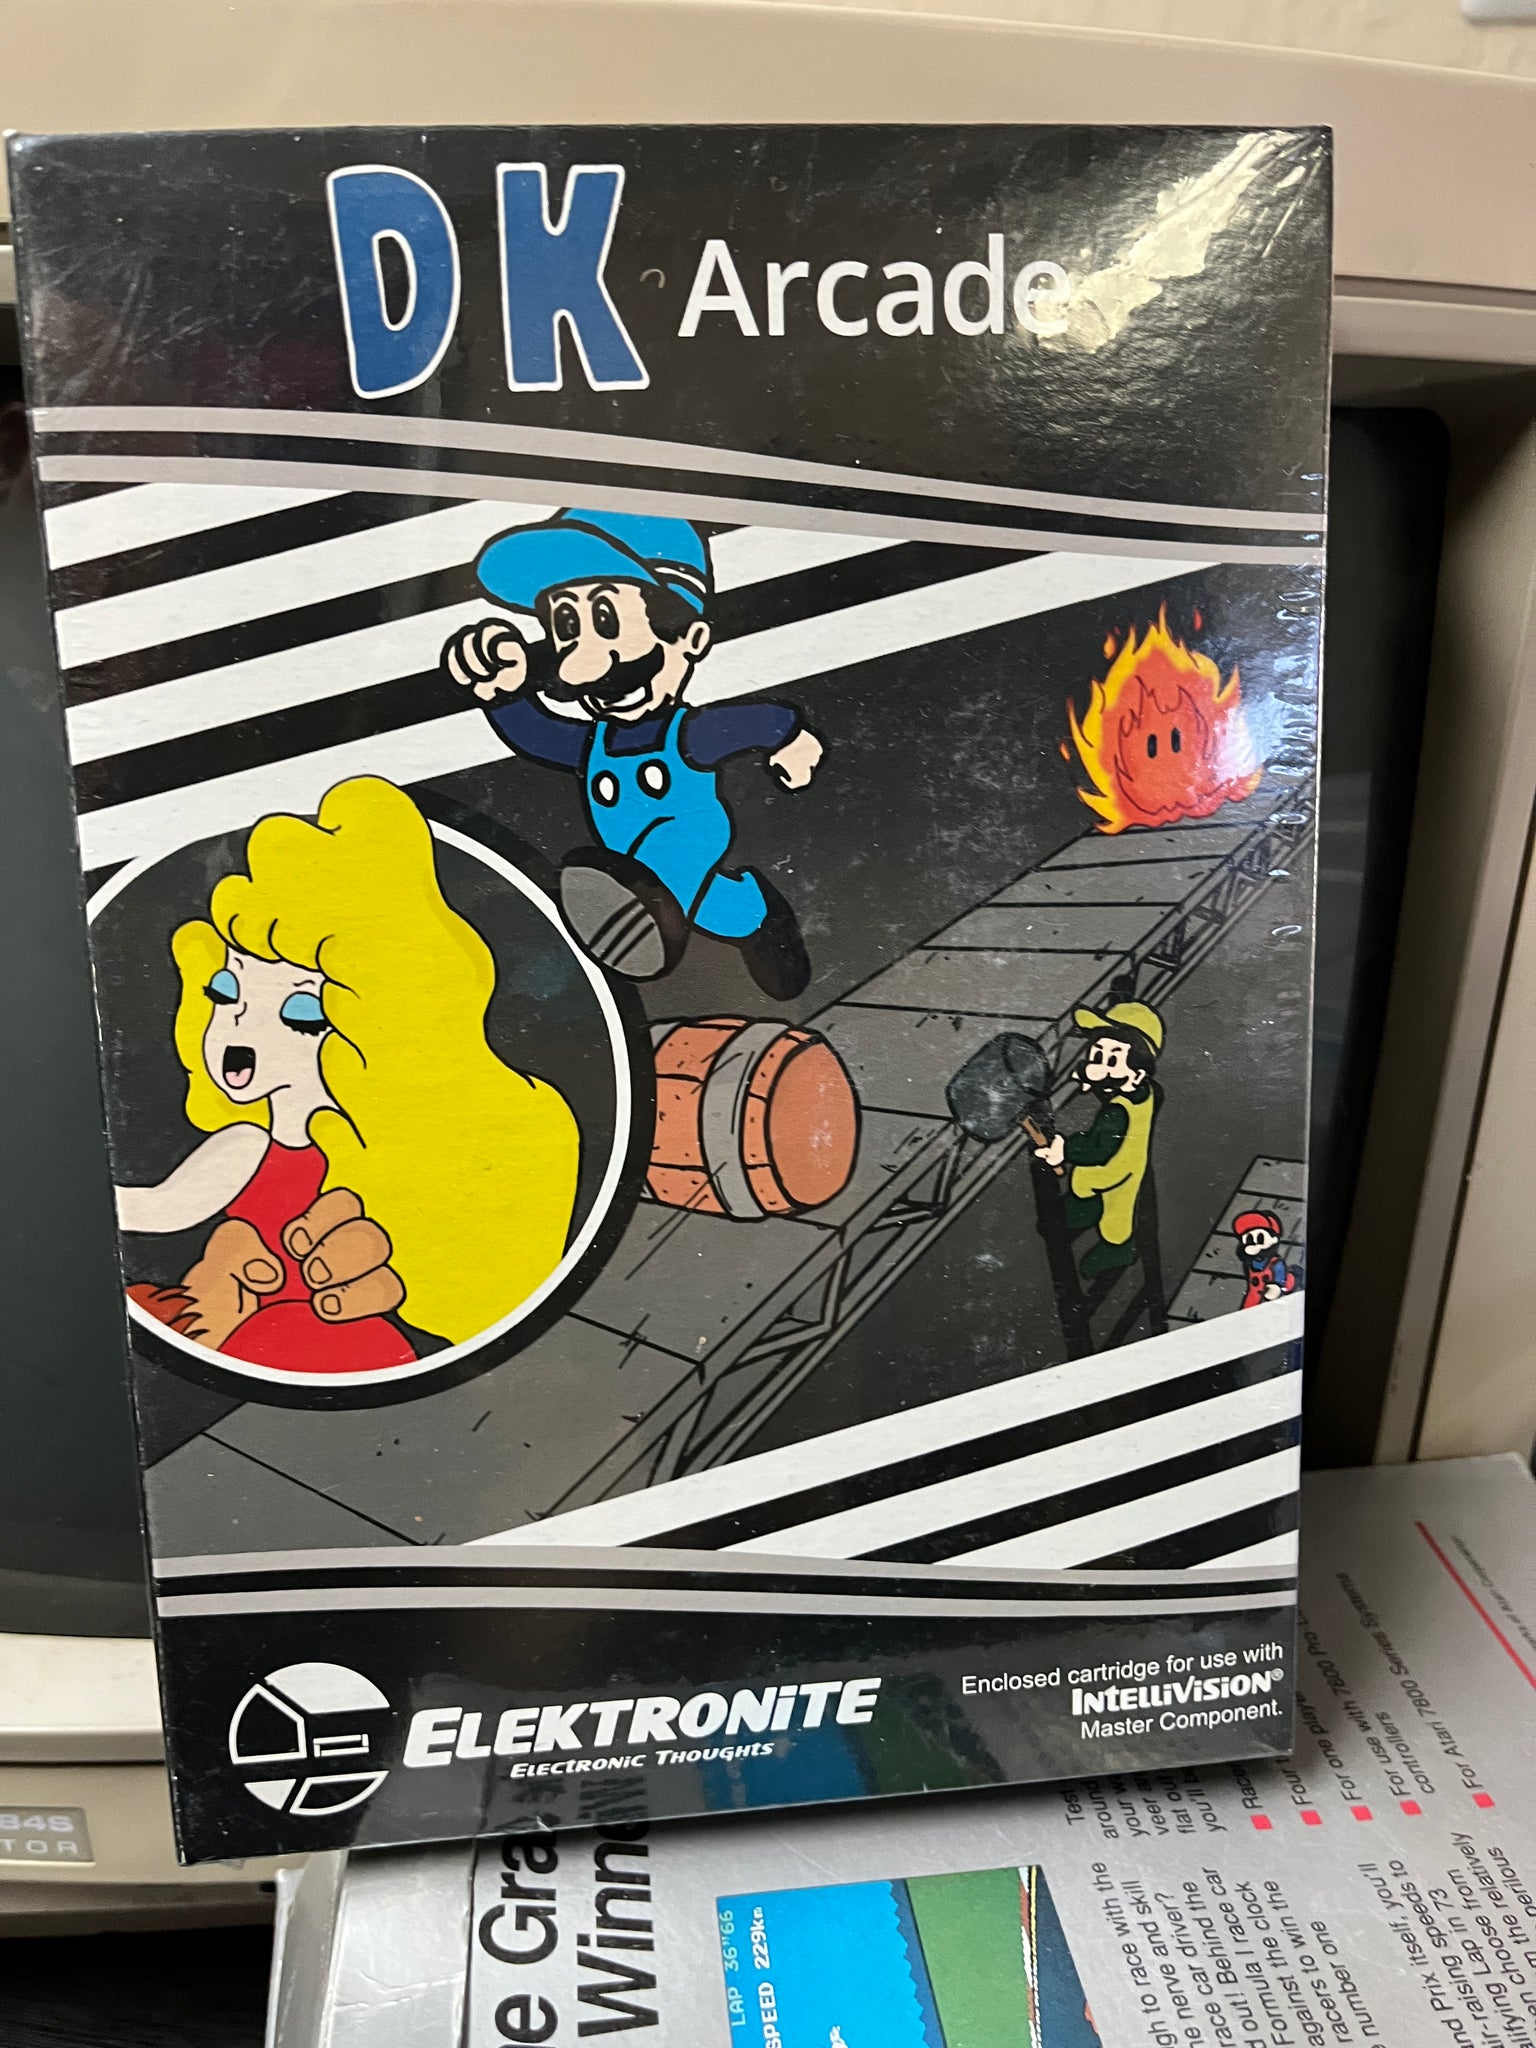 DK Arcade for Intellvision by Elektronite